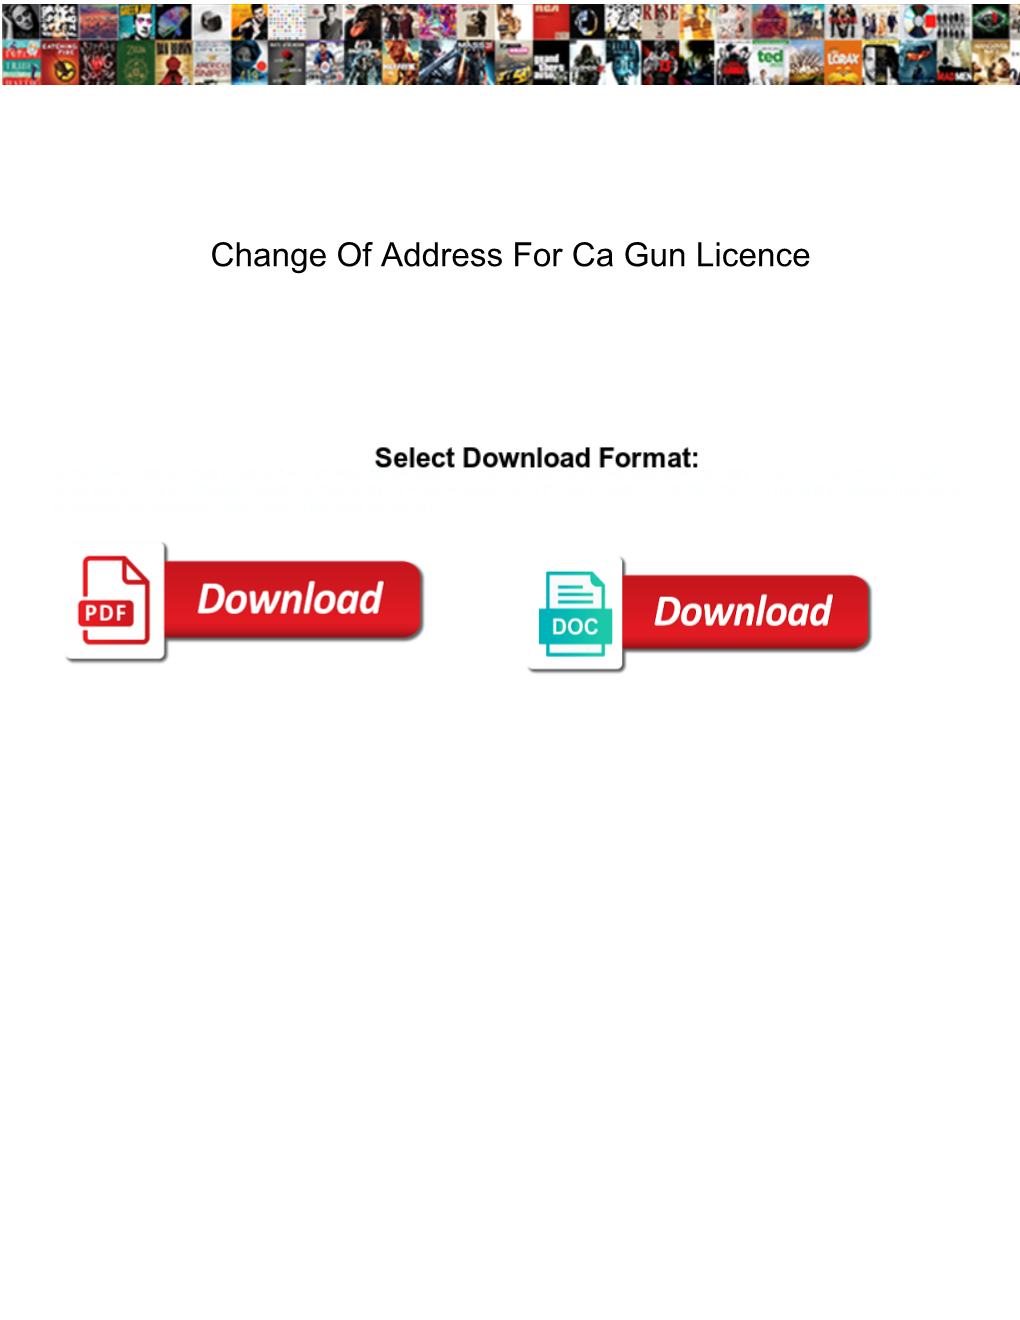 Change of Address for Ca Gun Licence